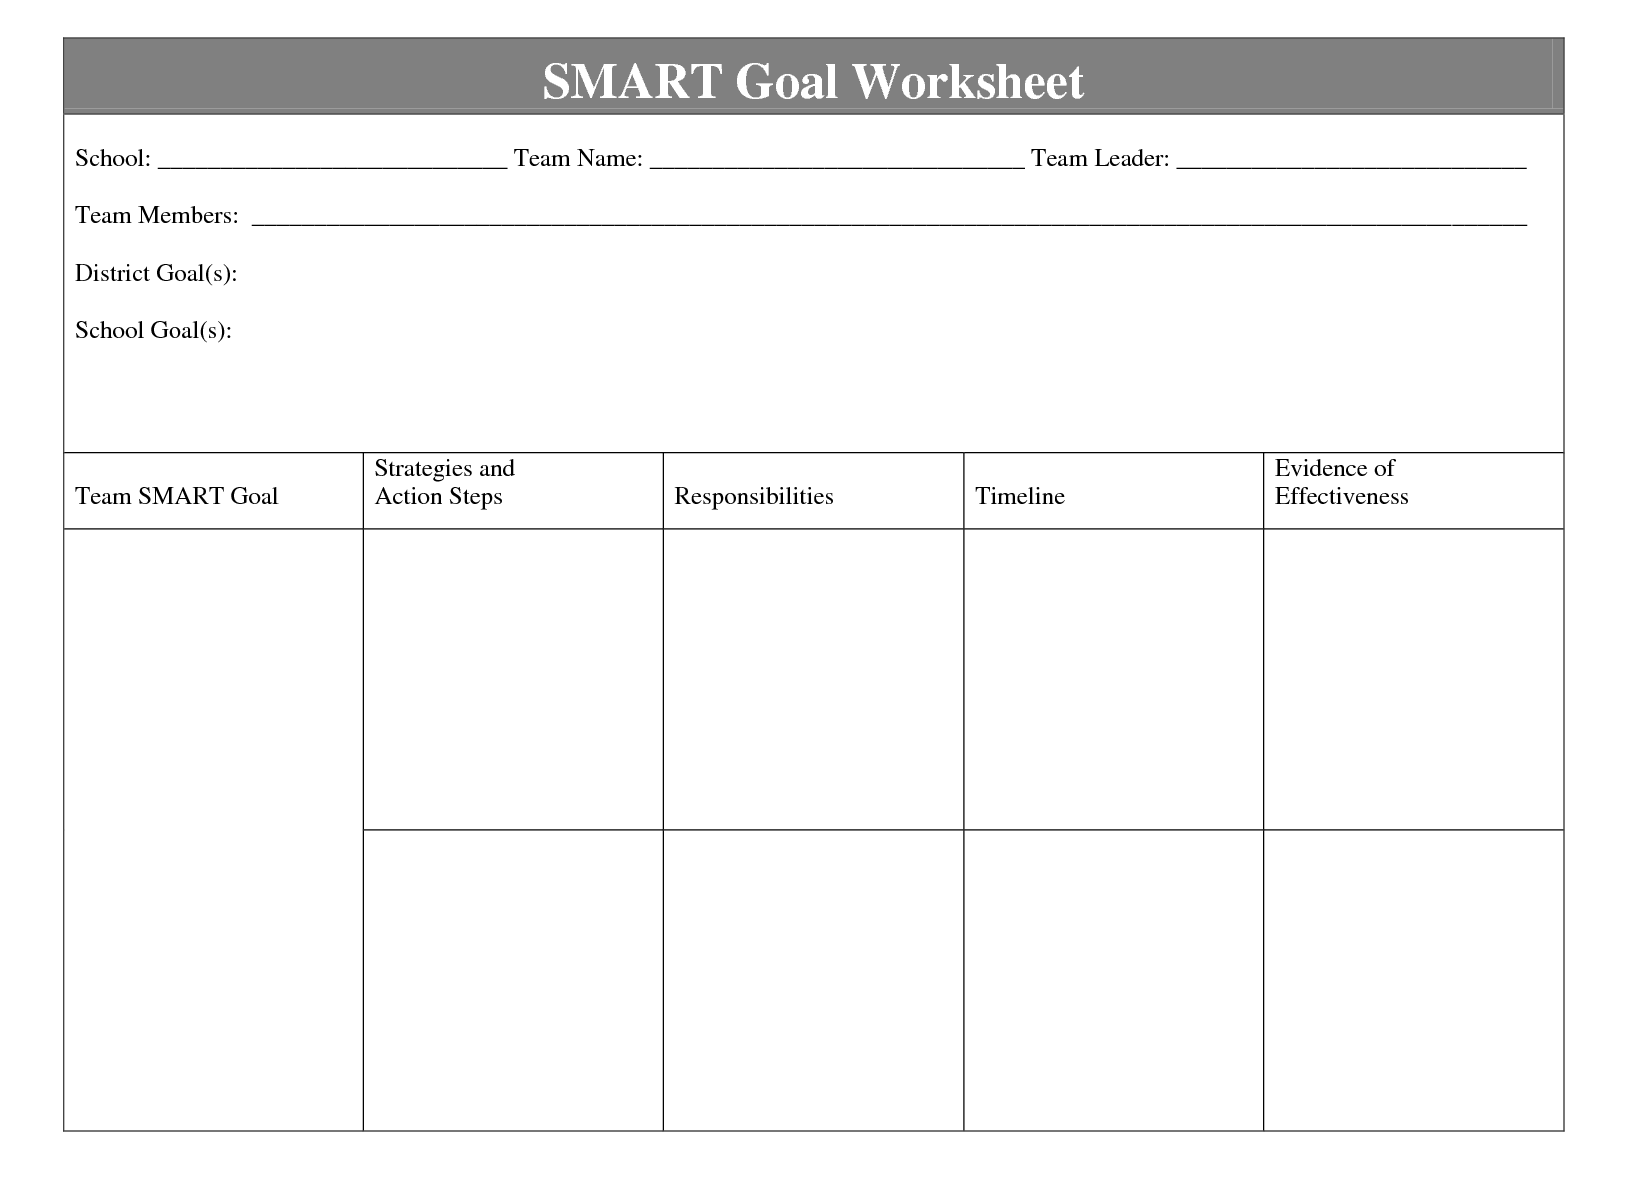 Smart Goal Setting Worksheets Students Image